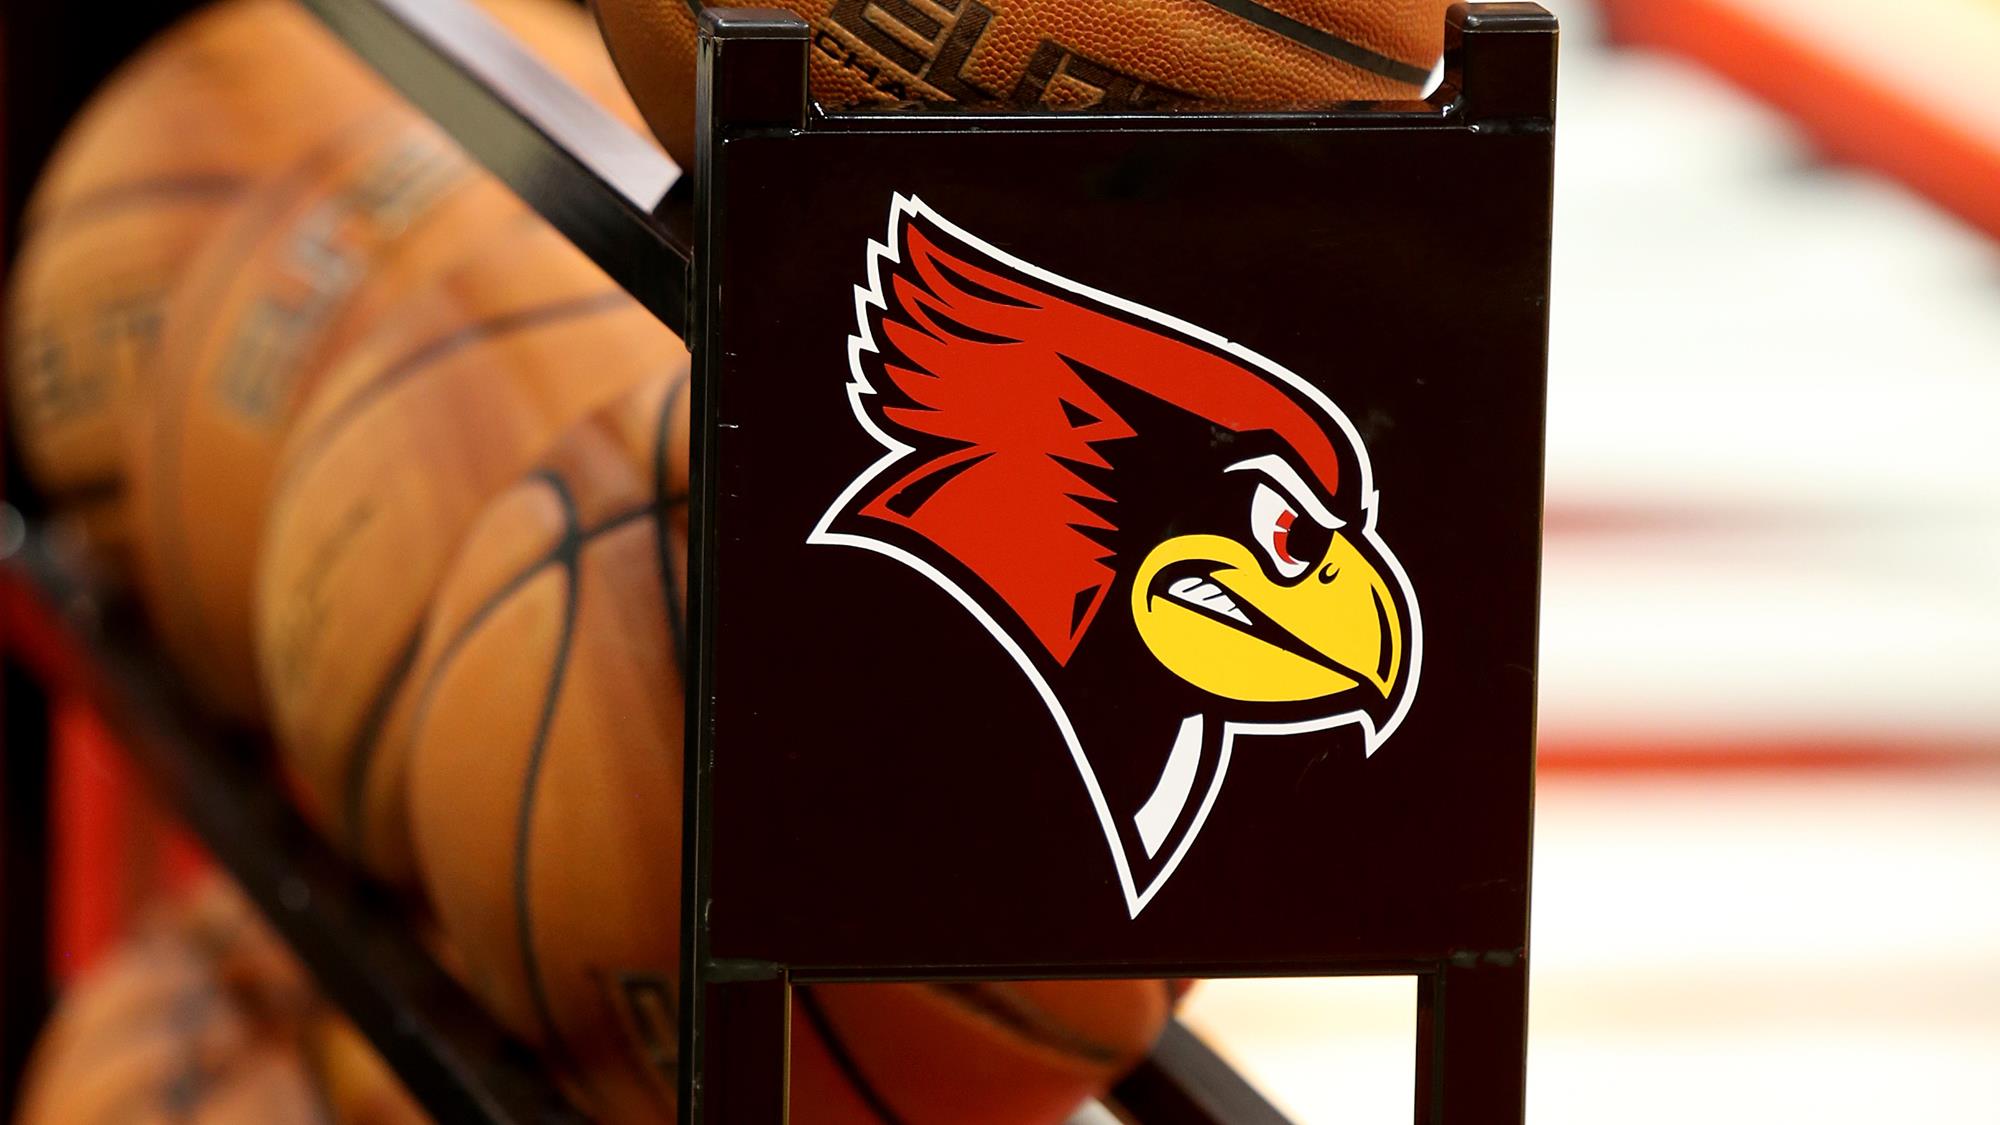 Redbird basketball rack with Redbird logo overlaid